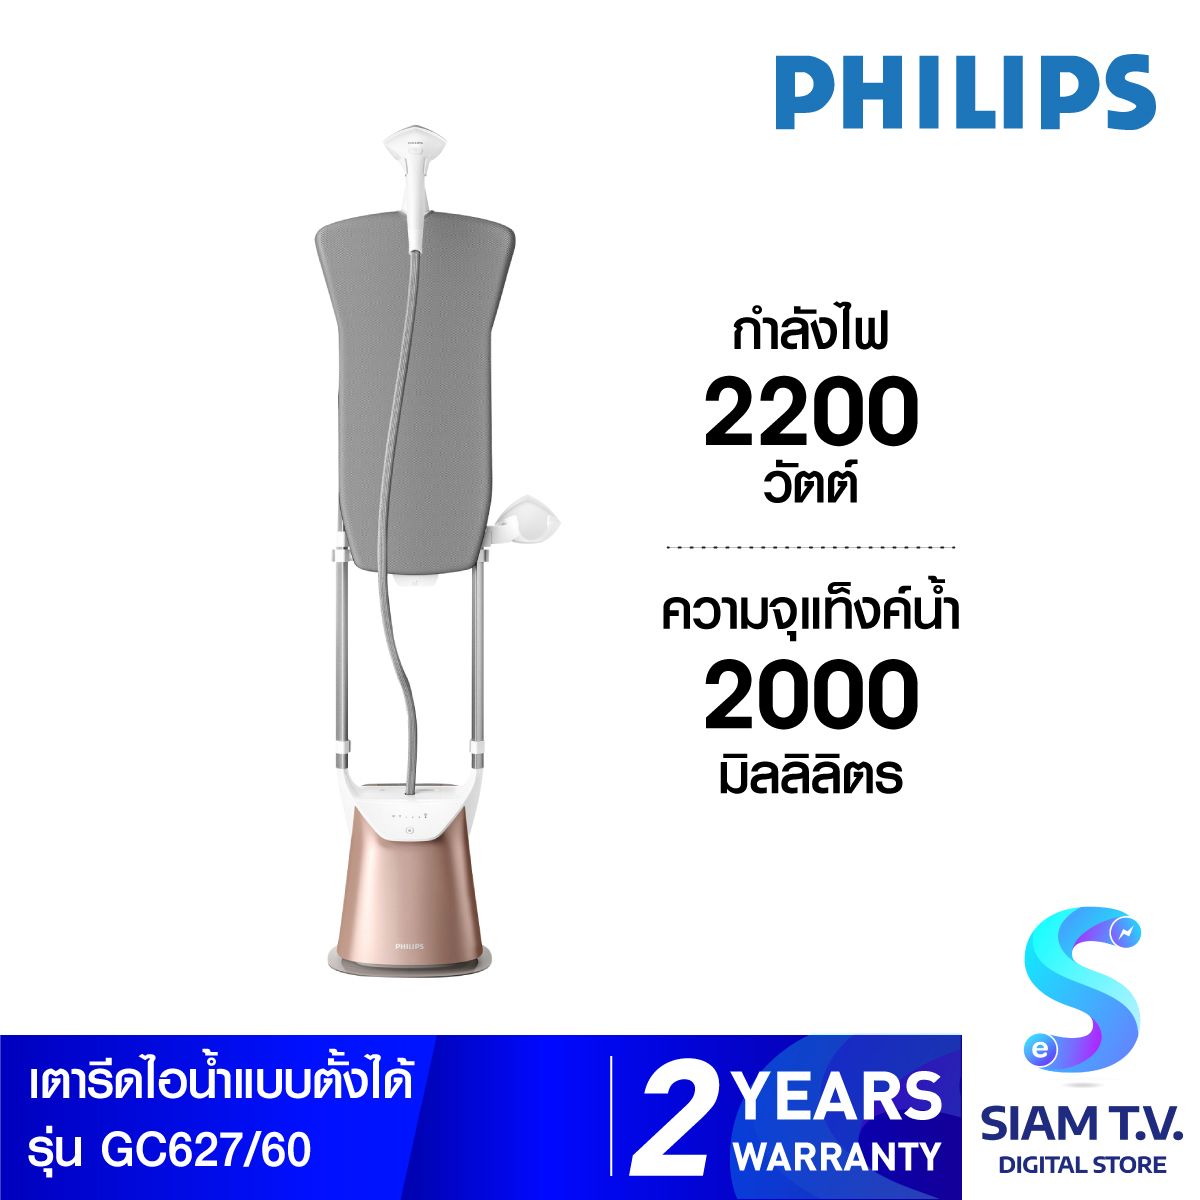 Philips เครื่องยืนรีดถนอมผ้า PerfectCare Garment Steamer Dual Heating GC627 60